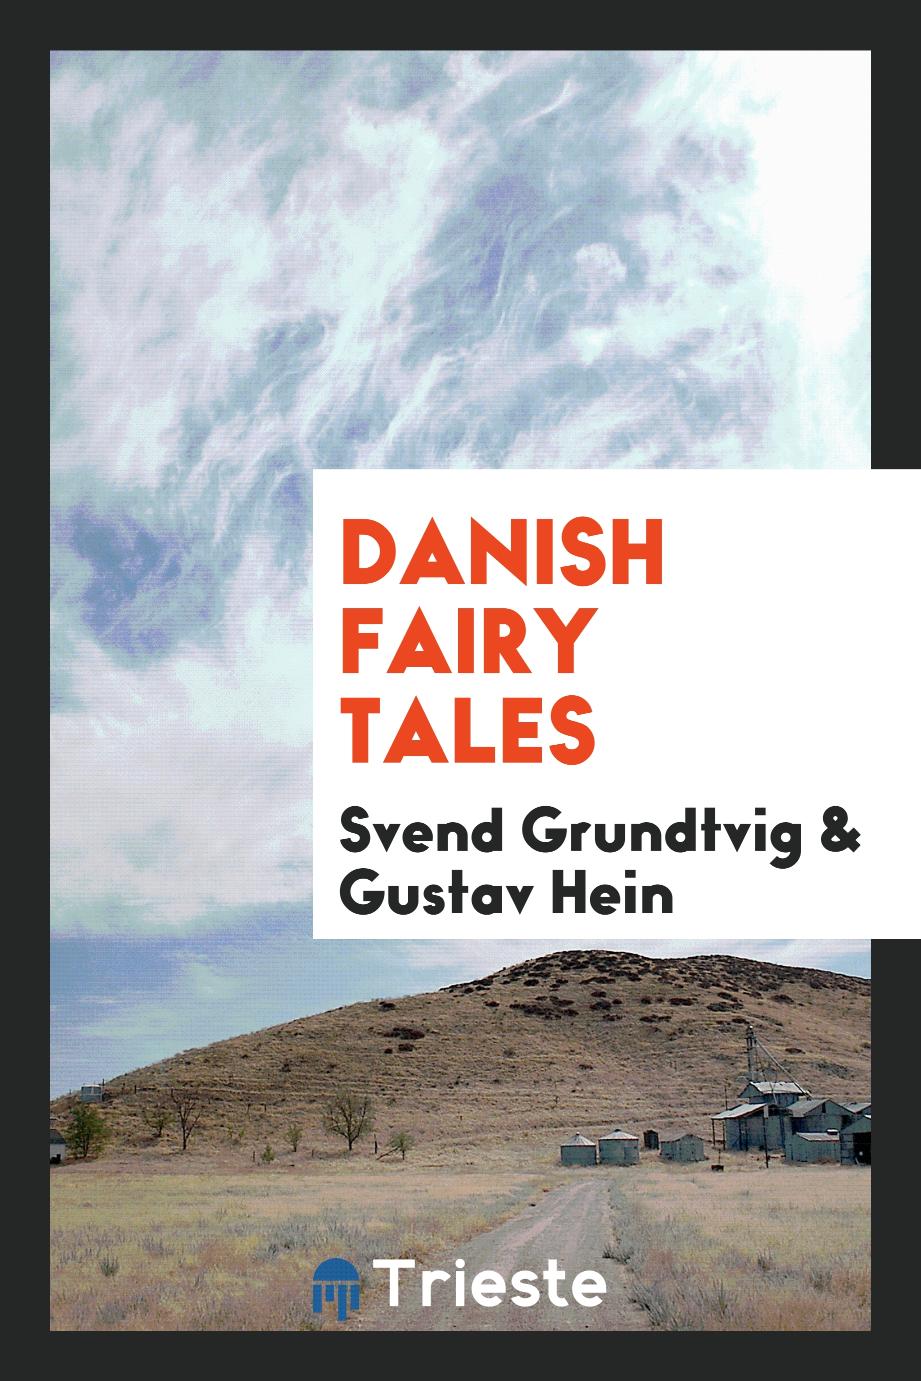 Danish fairy tales